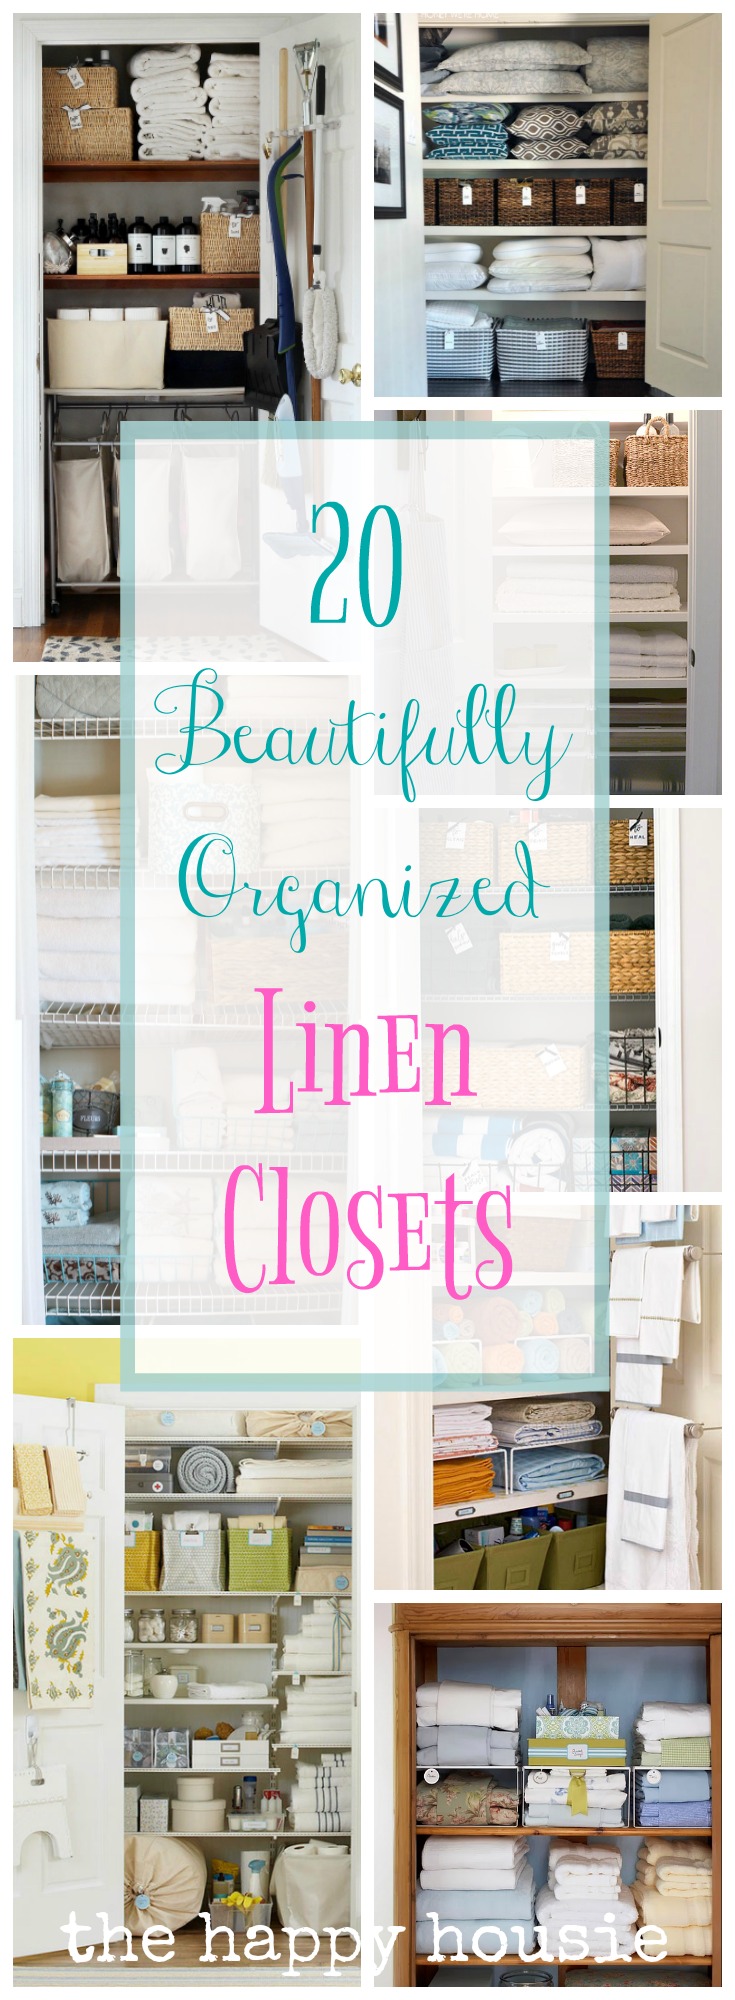 20 beautifully organized linen closets graphic.